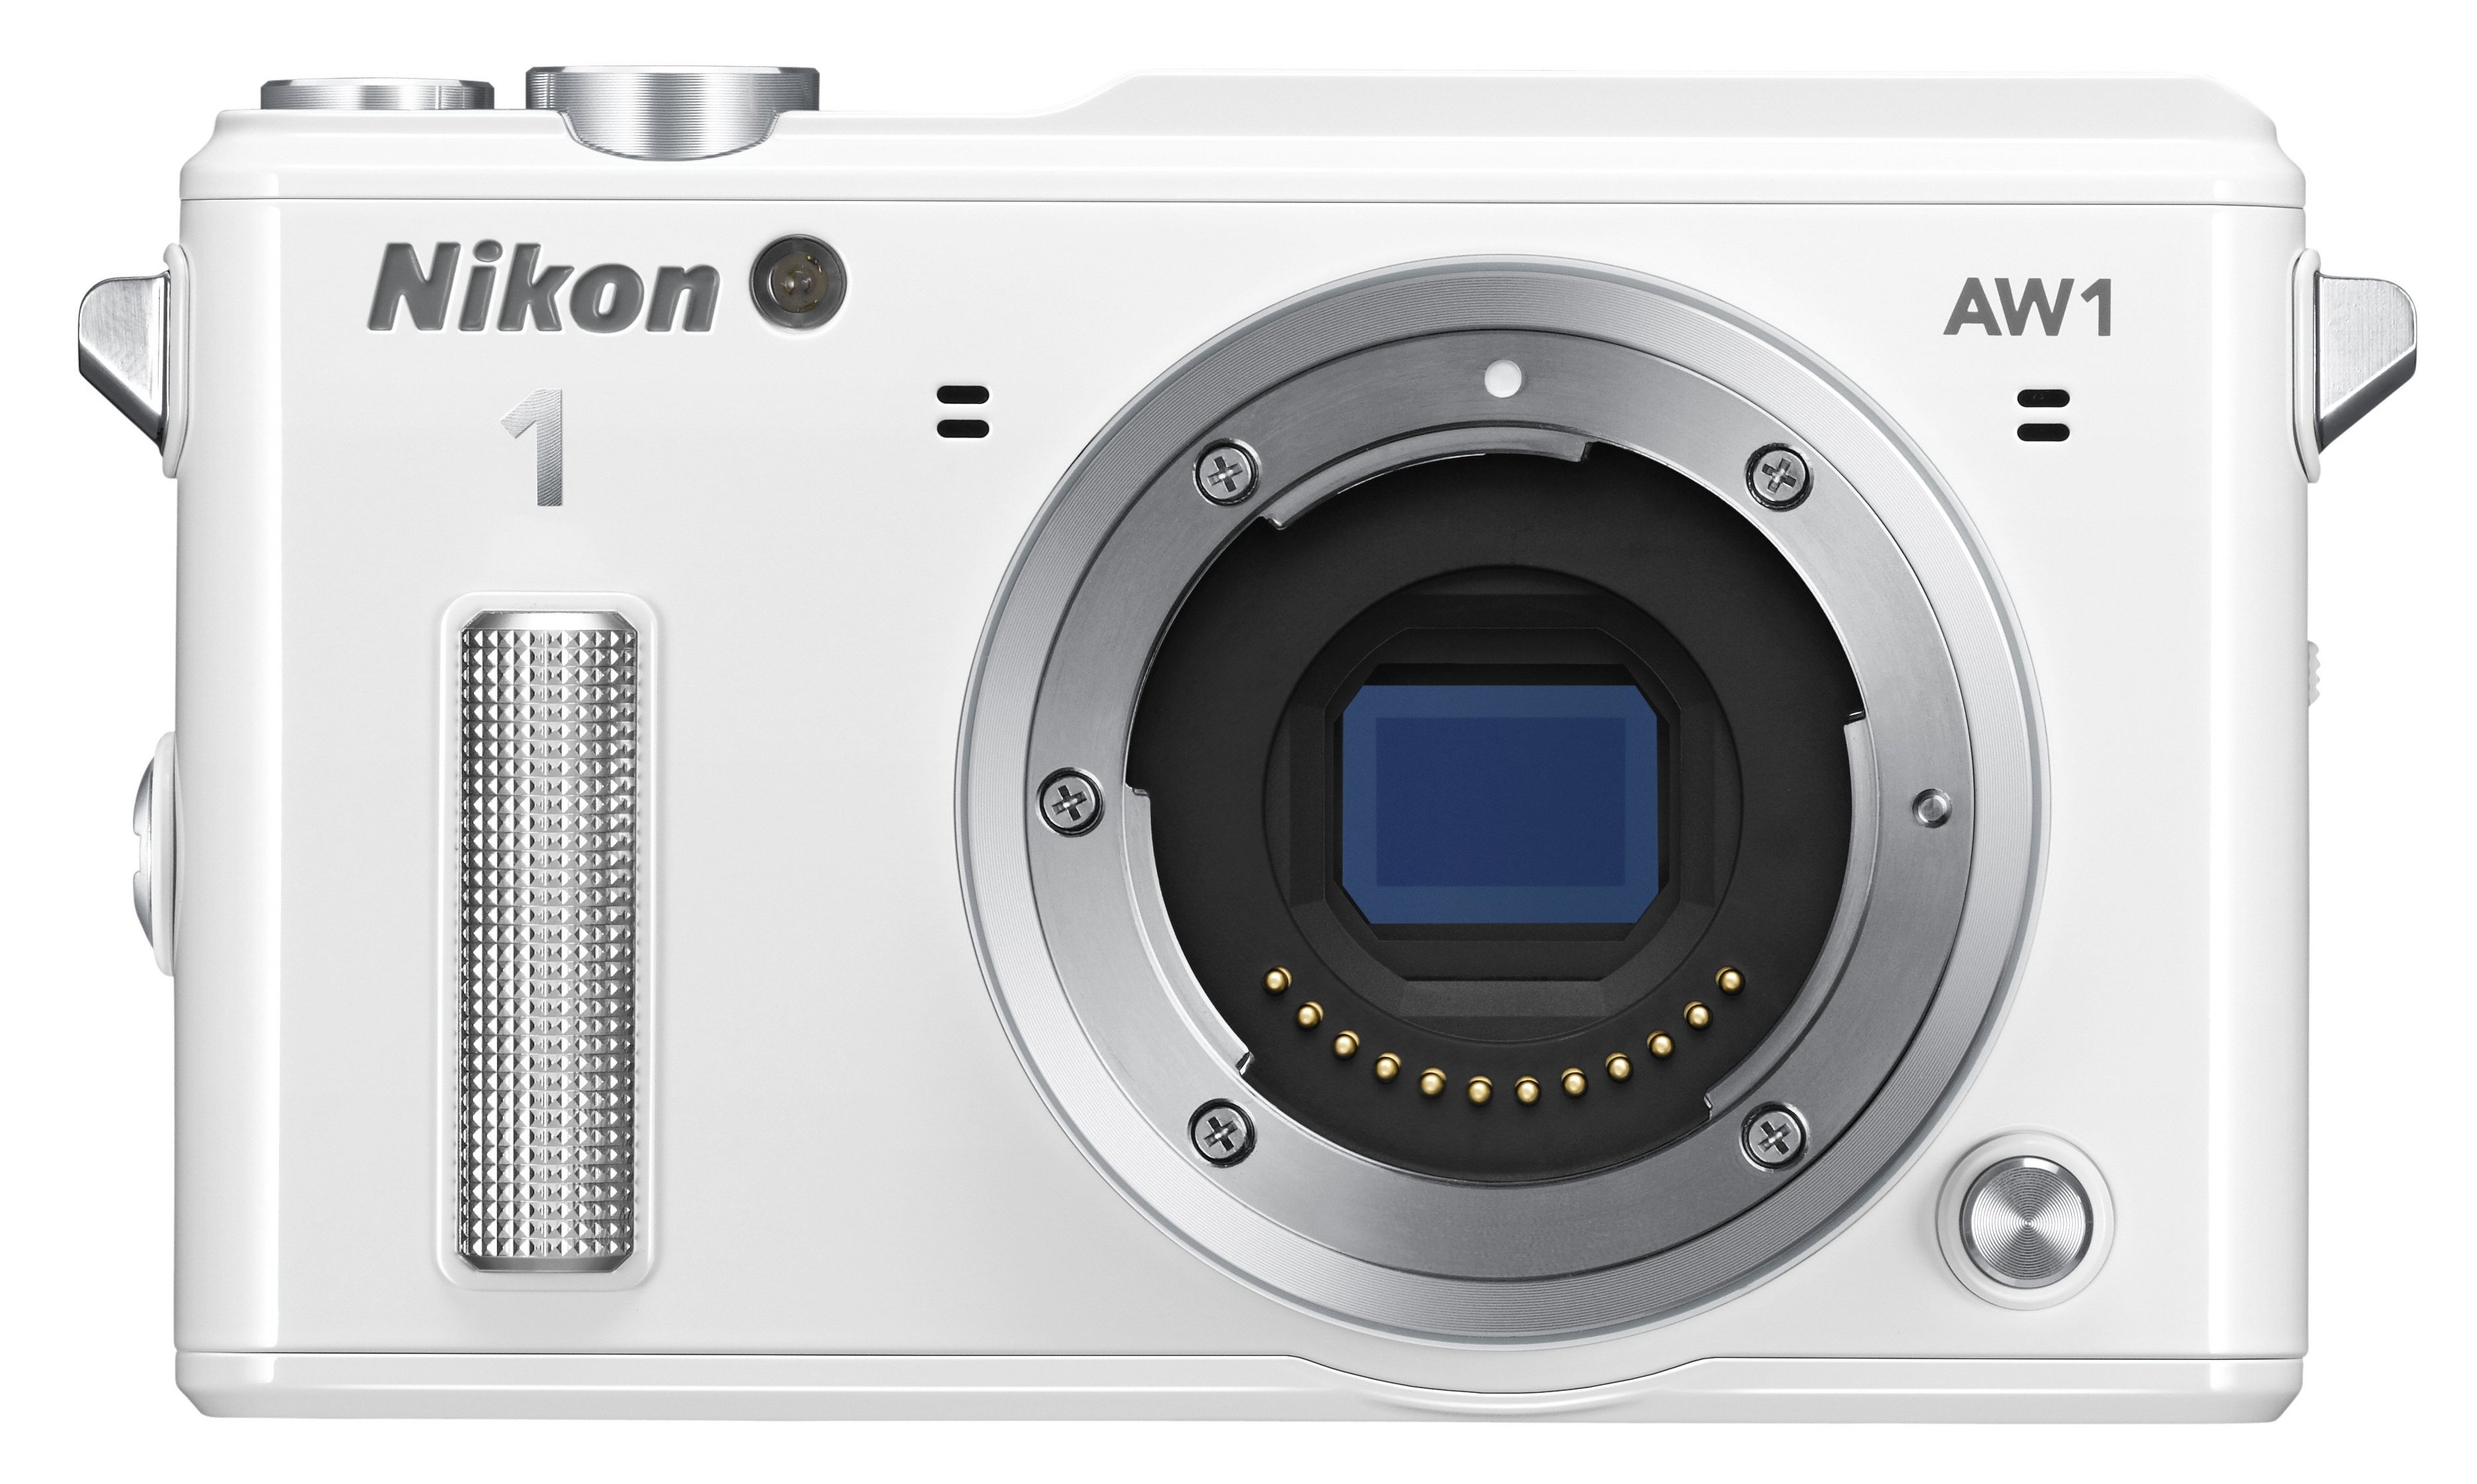 Nikon AW1 Digital Camera